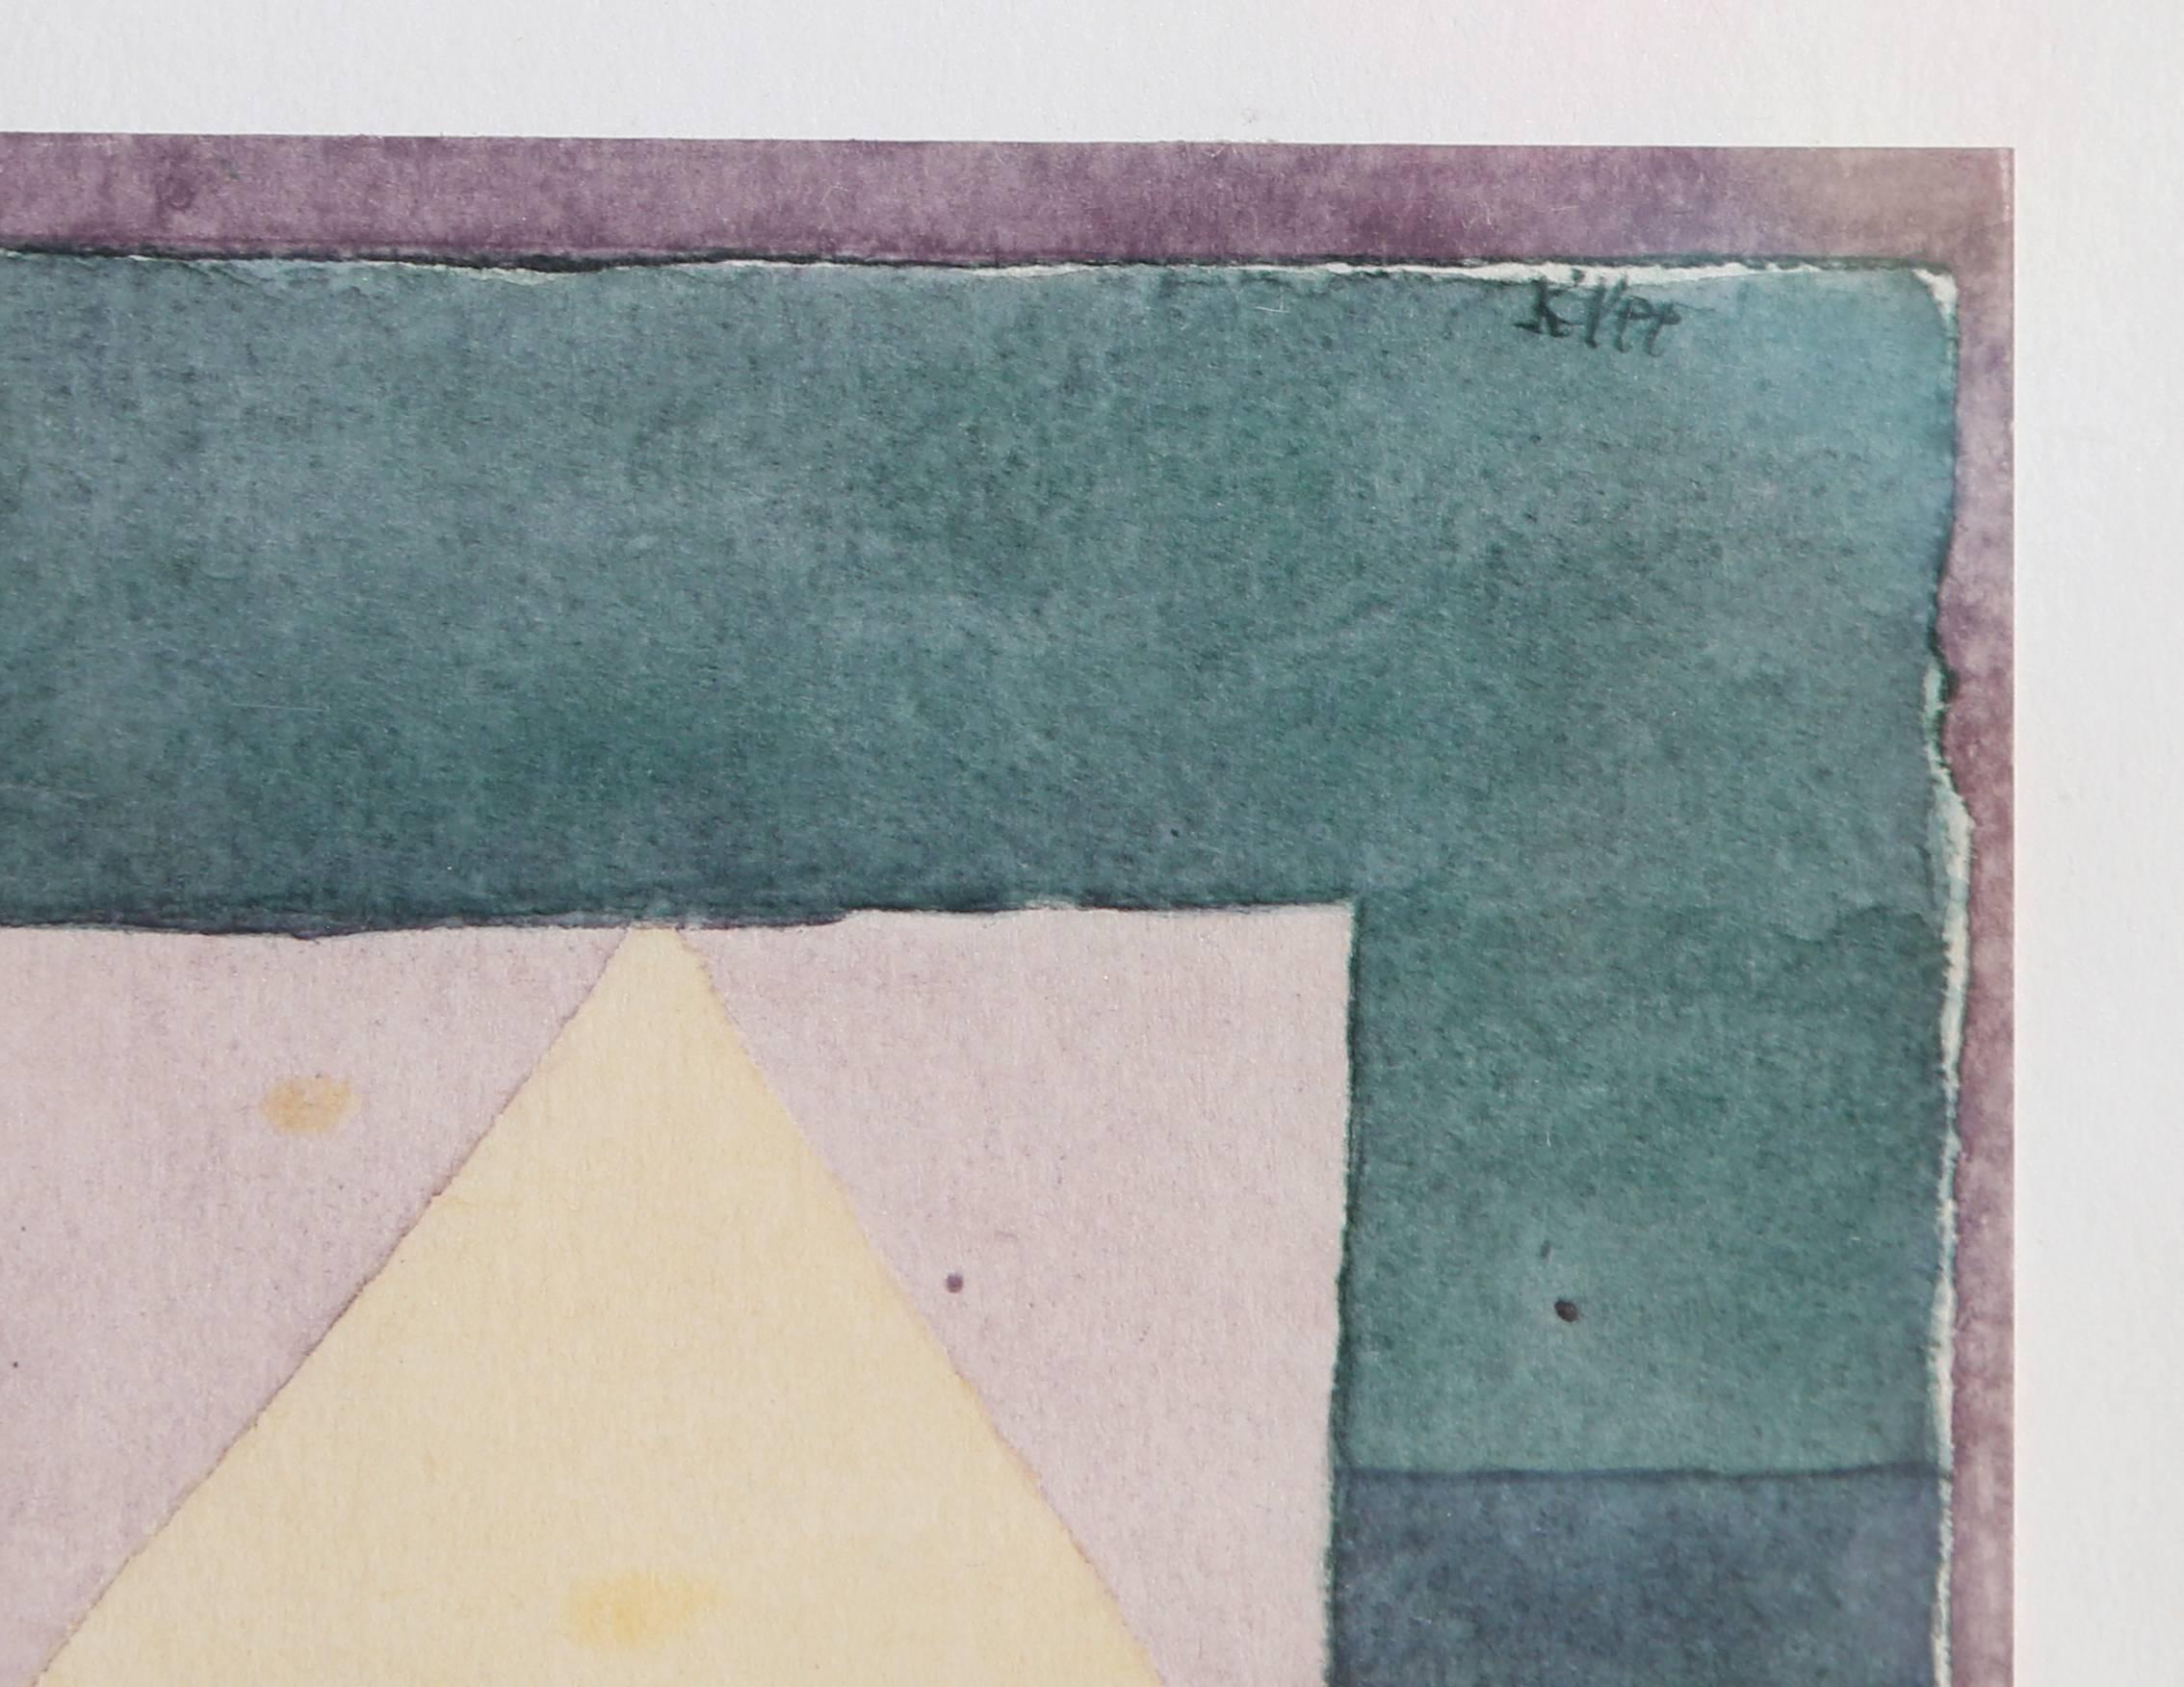 Drei Hauser Grun-violette Stufung (Troi Maisons Gradation vert-violet) - by Klee - Print by (after) Paul Klee